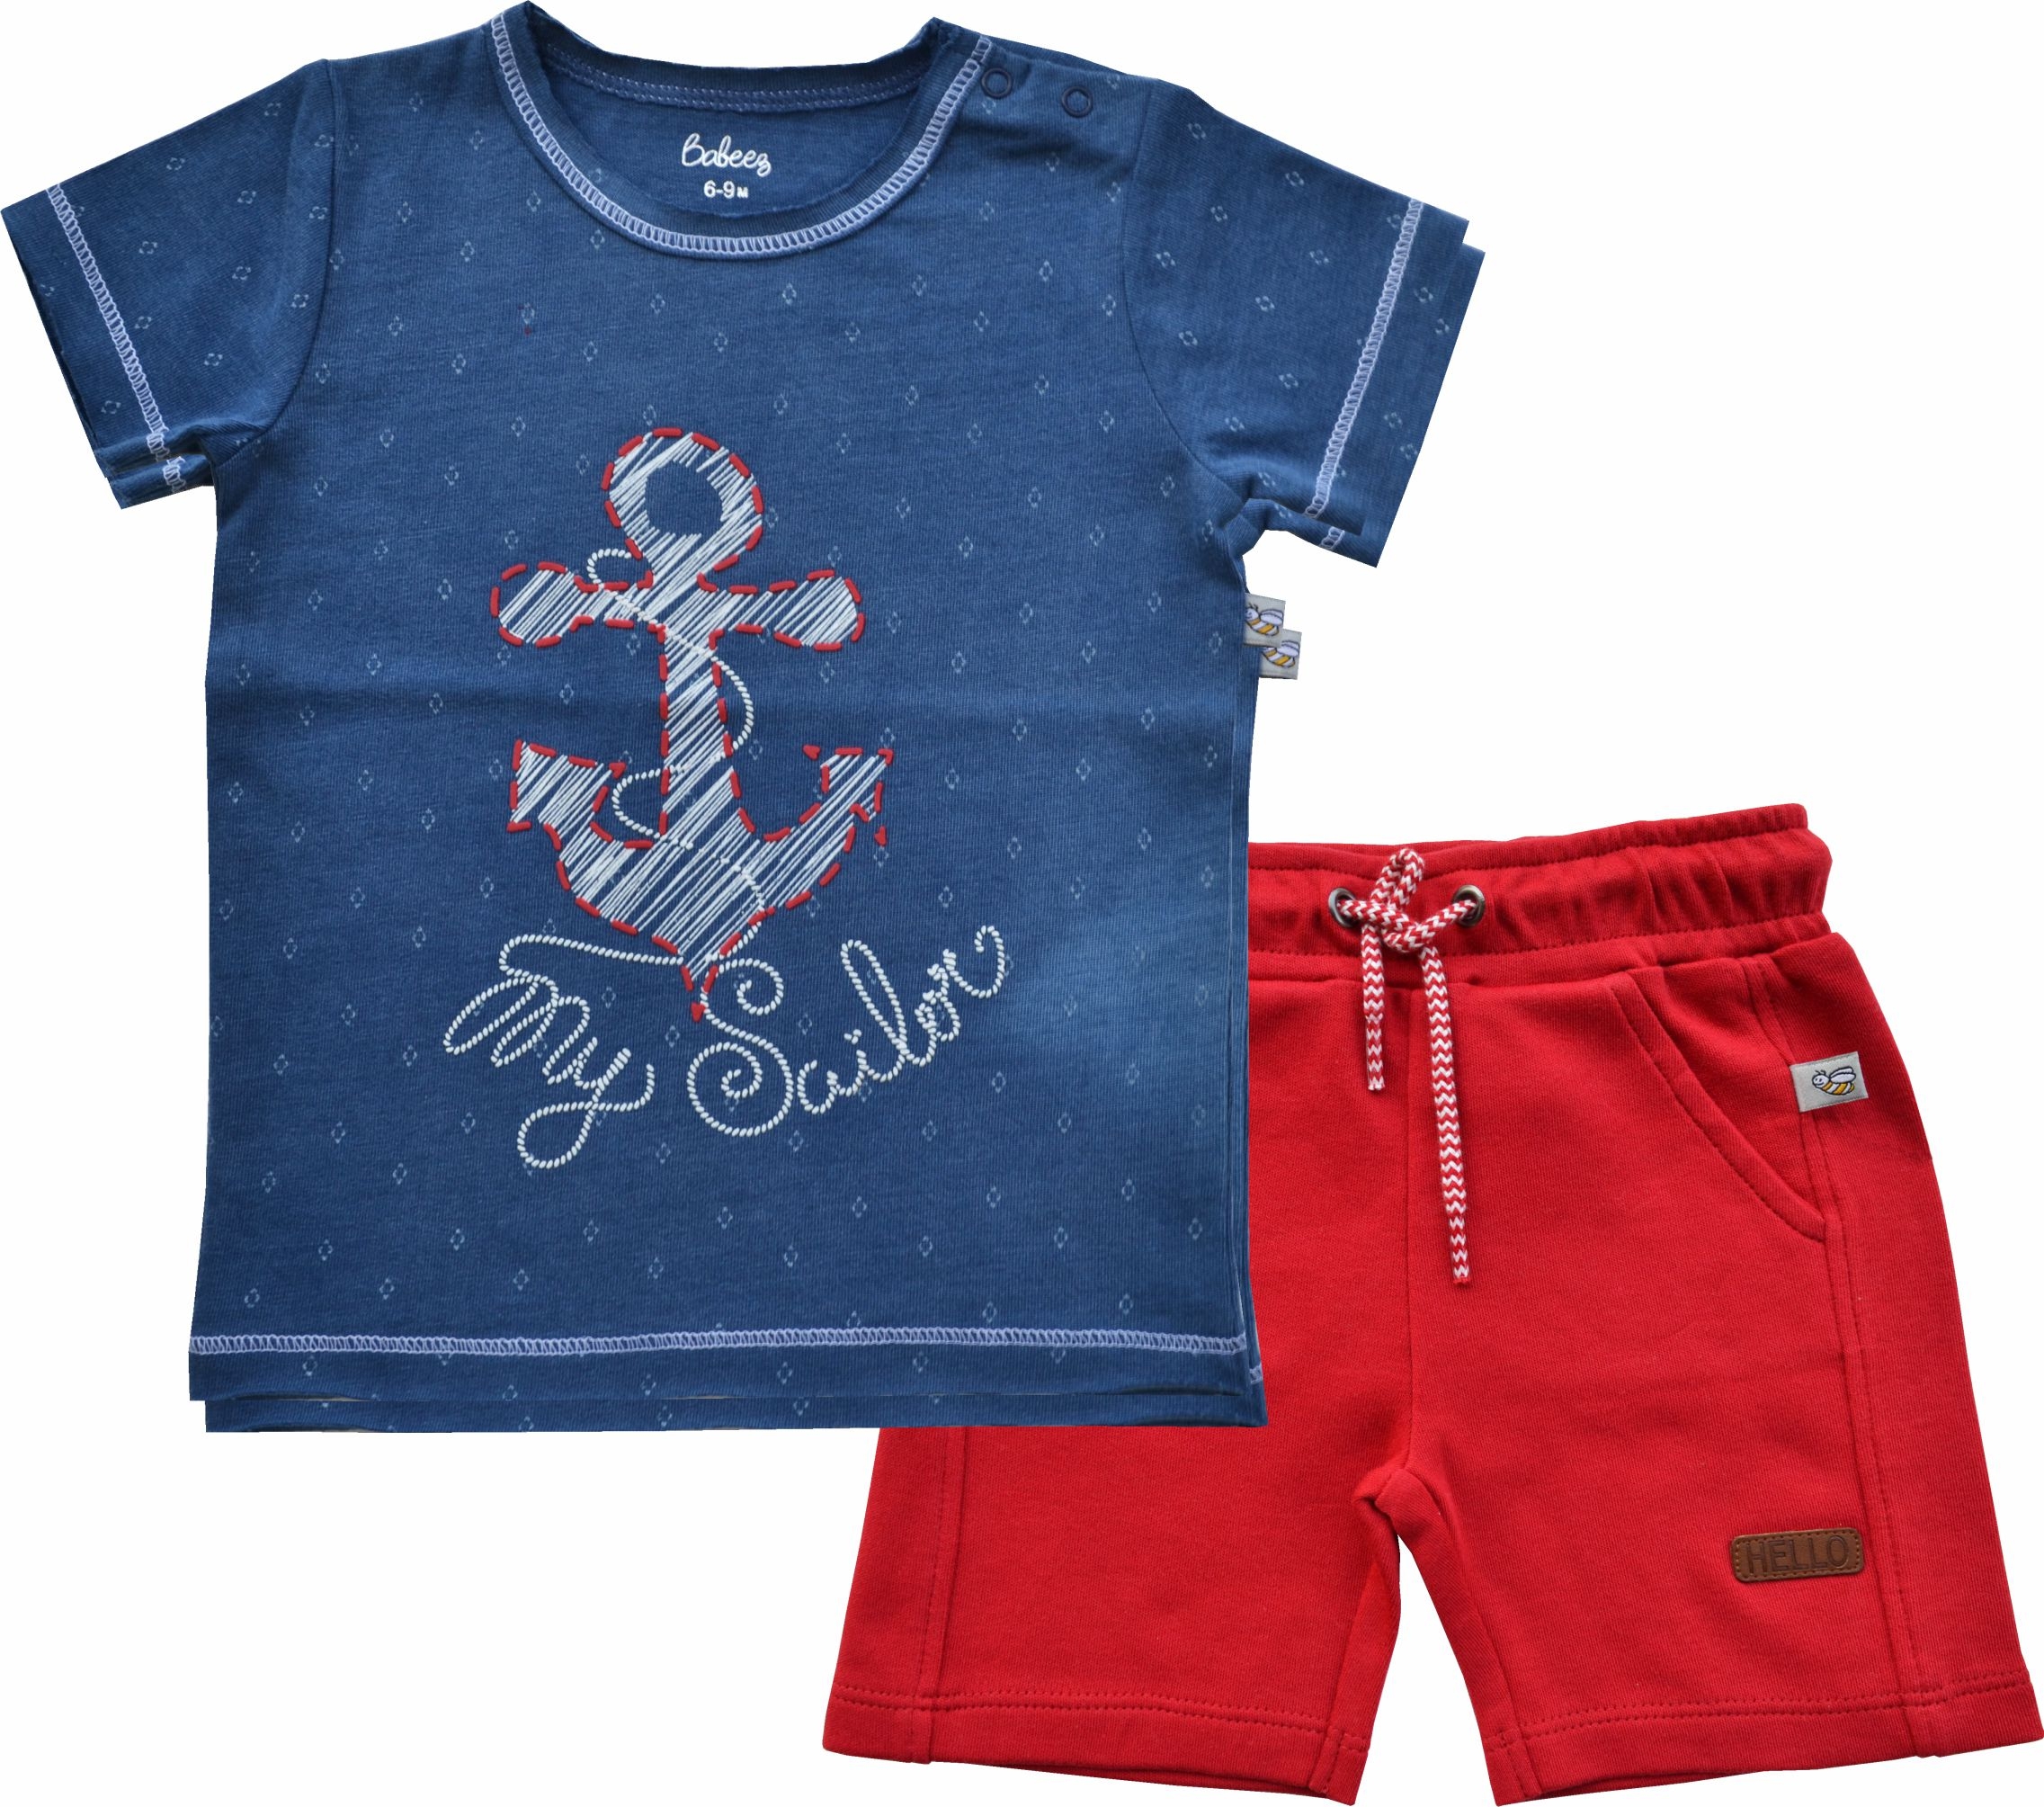 My Sailor print on Denim Look T-Shirt+Red Shorts Set (100% Cotton Single Jersey)